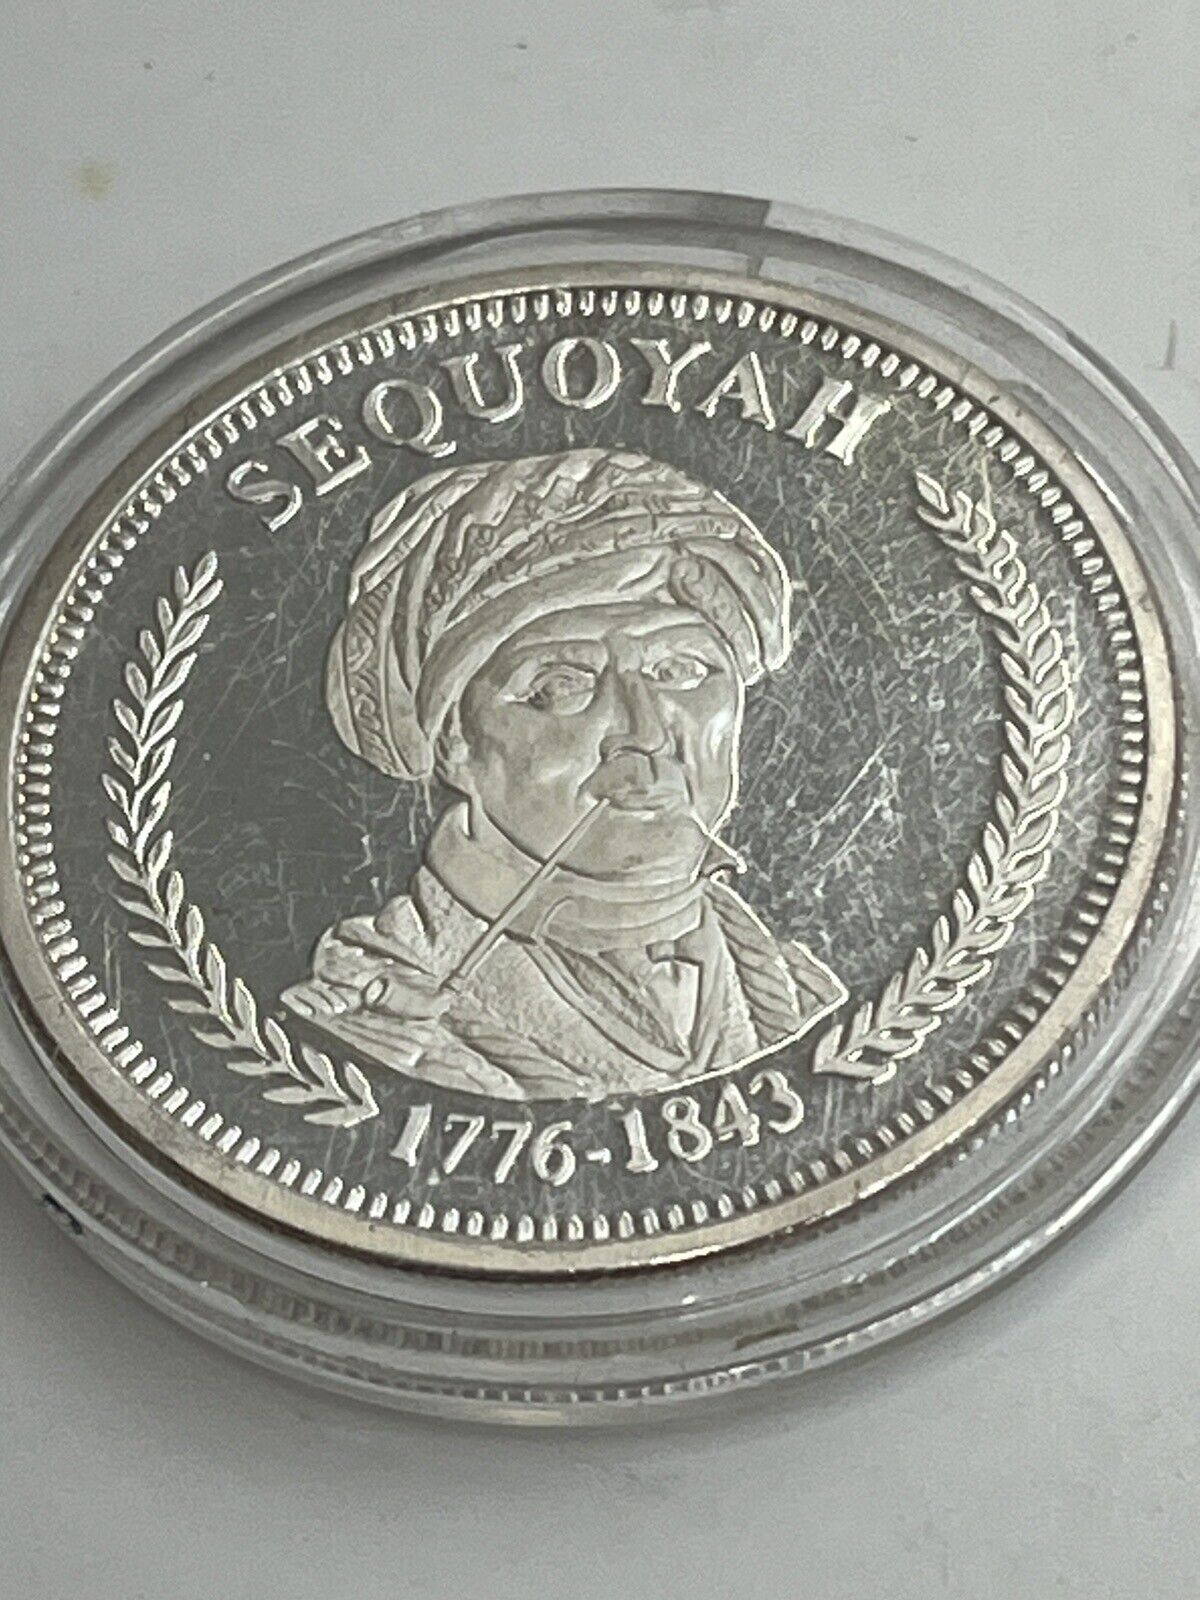 SEQUOYAH 1776-1843 COIN INVENTION OF CHEROKEE ALPHABET 